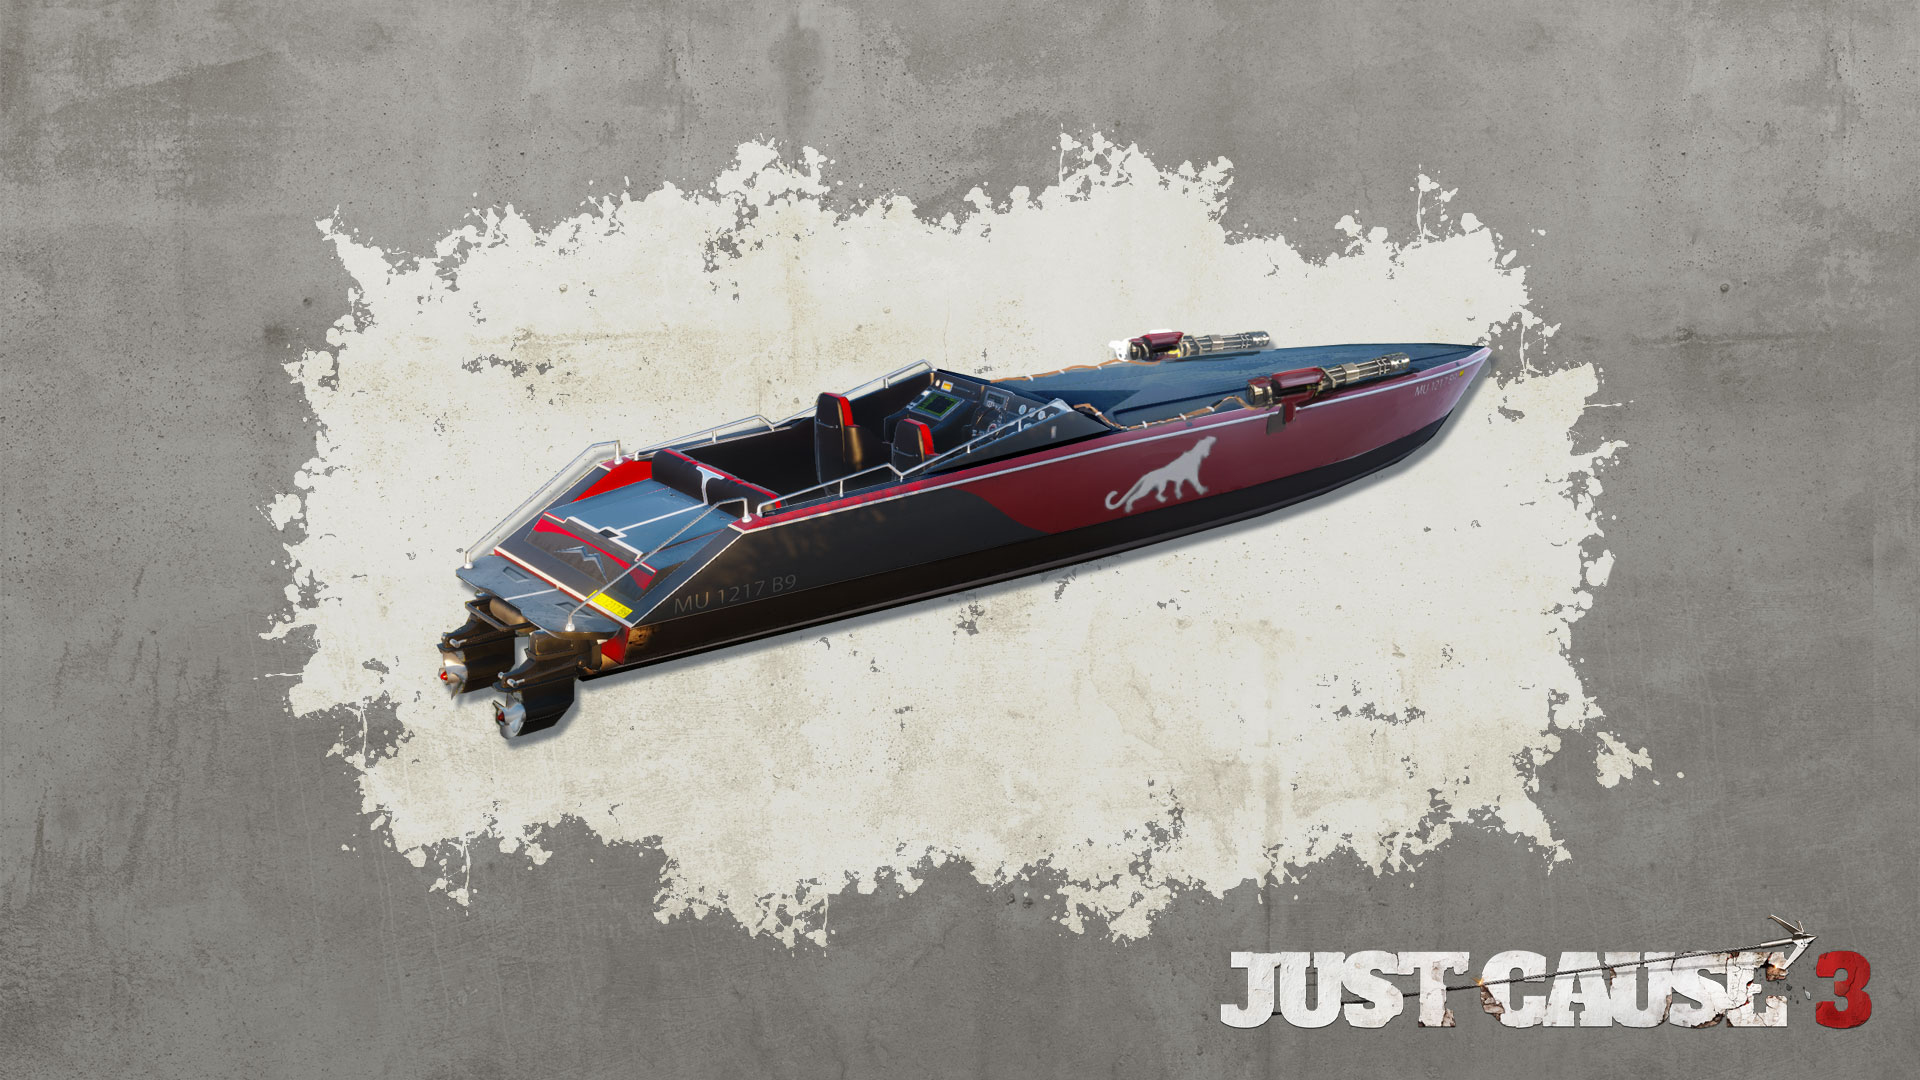 [$ 1.56] Just Cause 3 - Mini-Gun Racing Boat DLC Steam CD Key